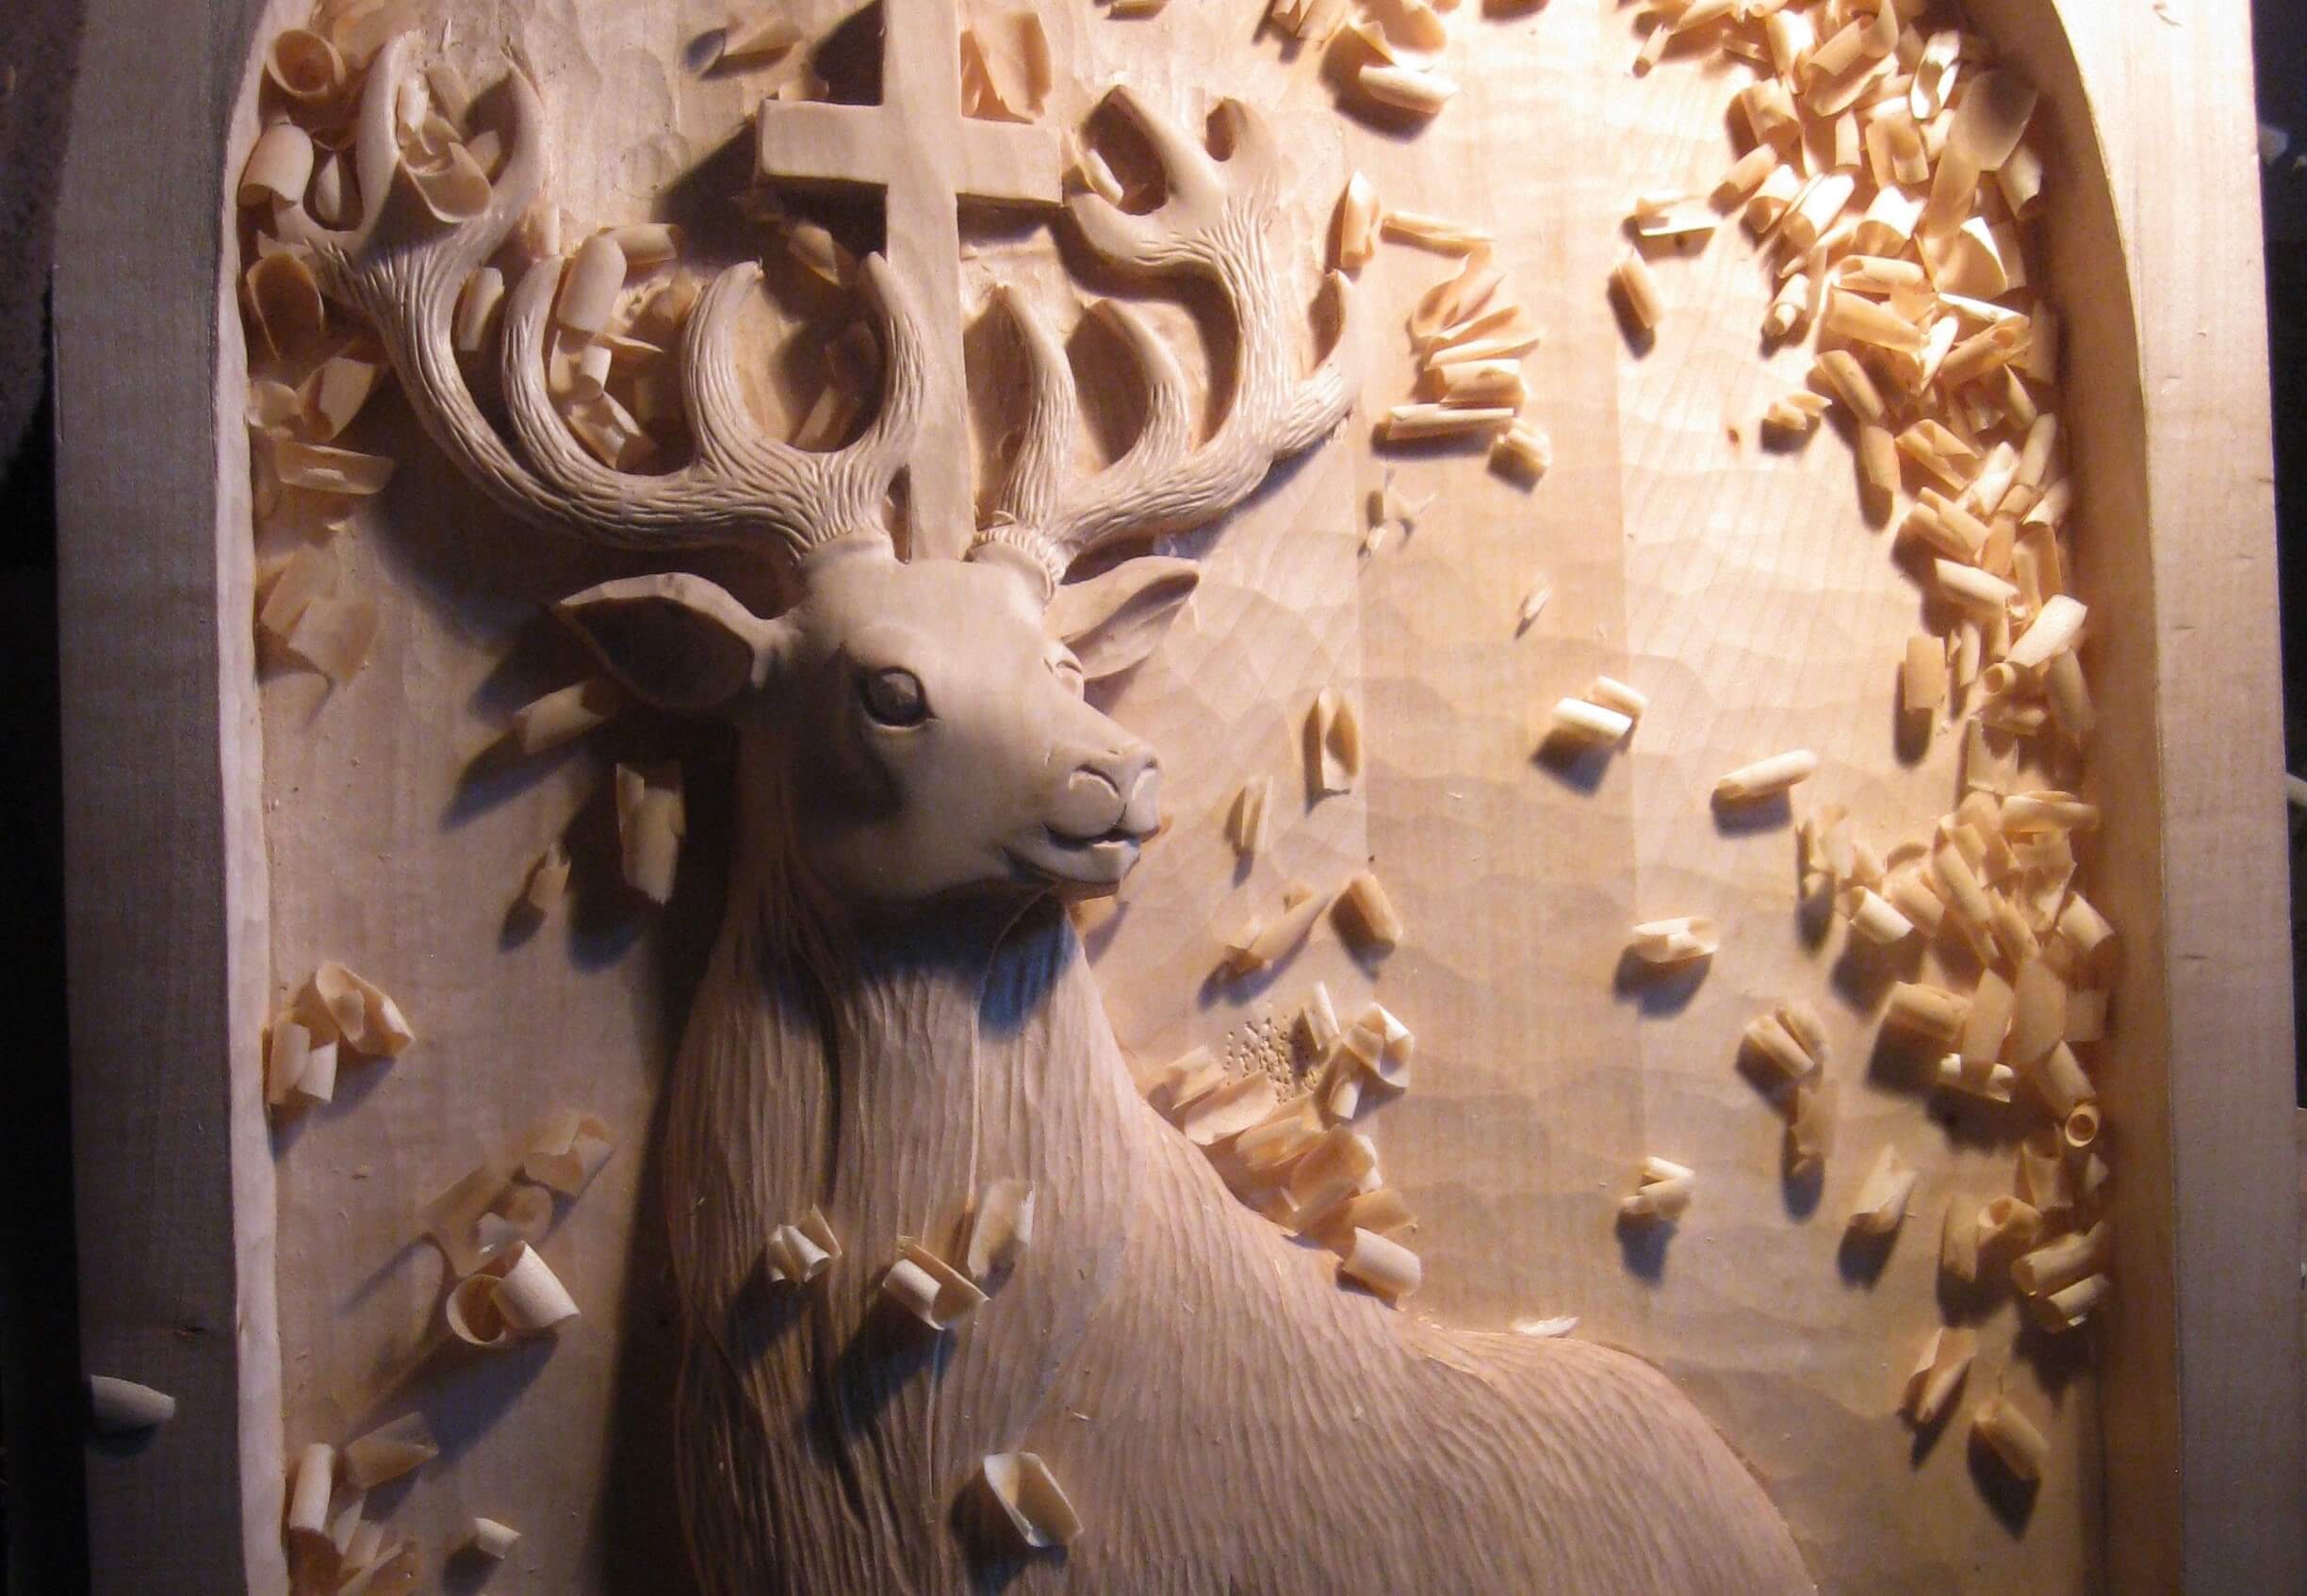 wood carving designs